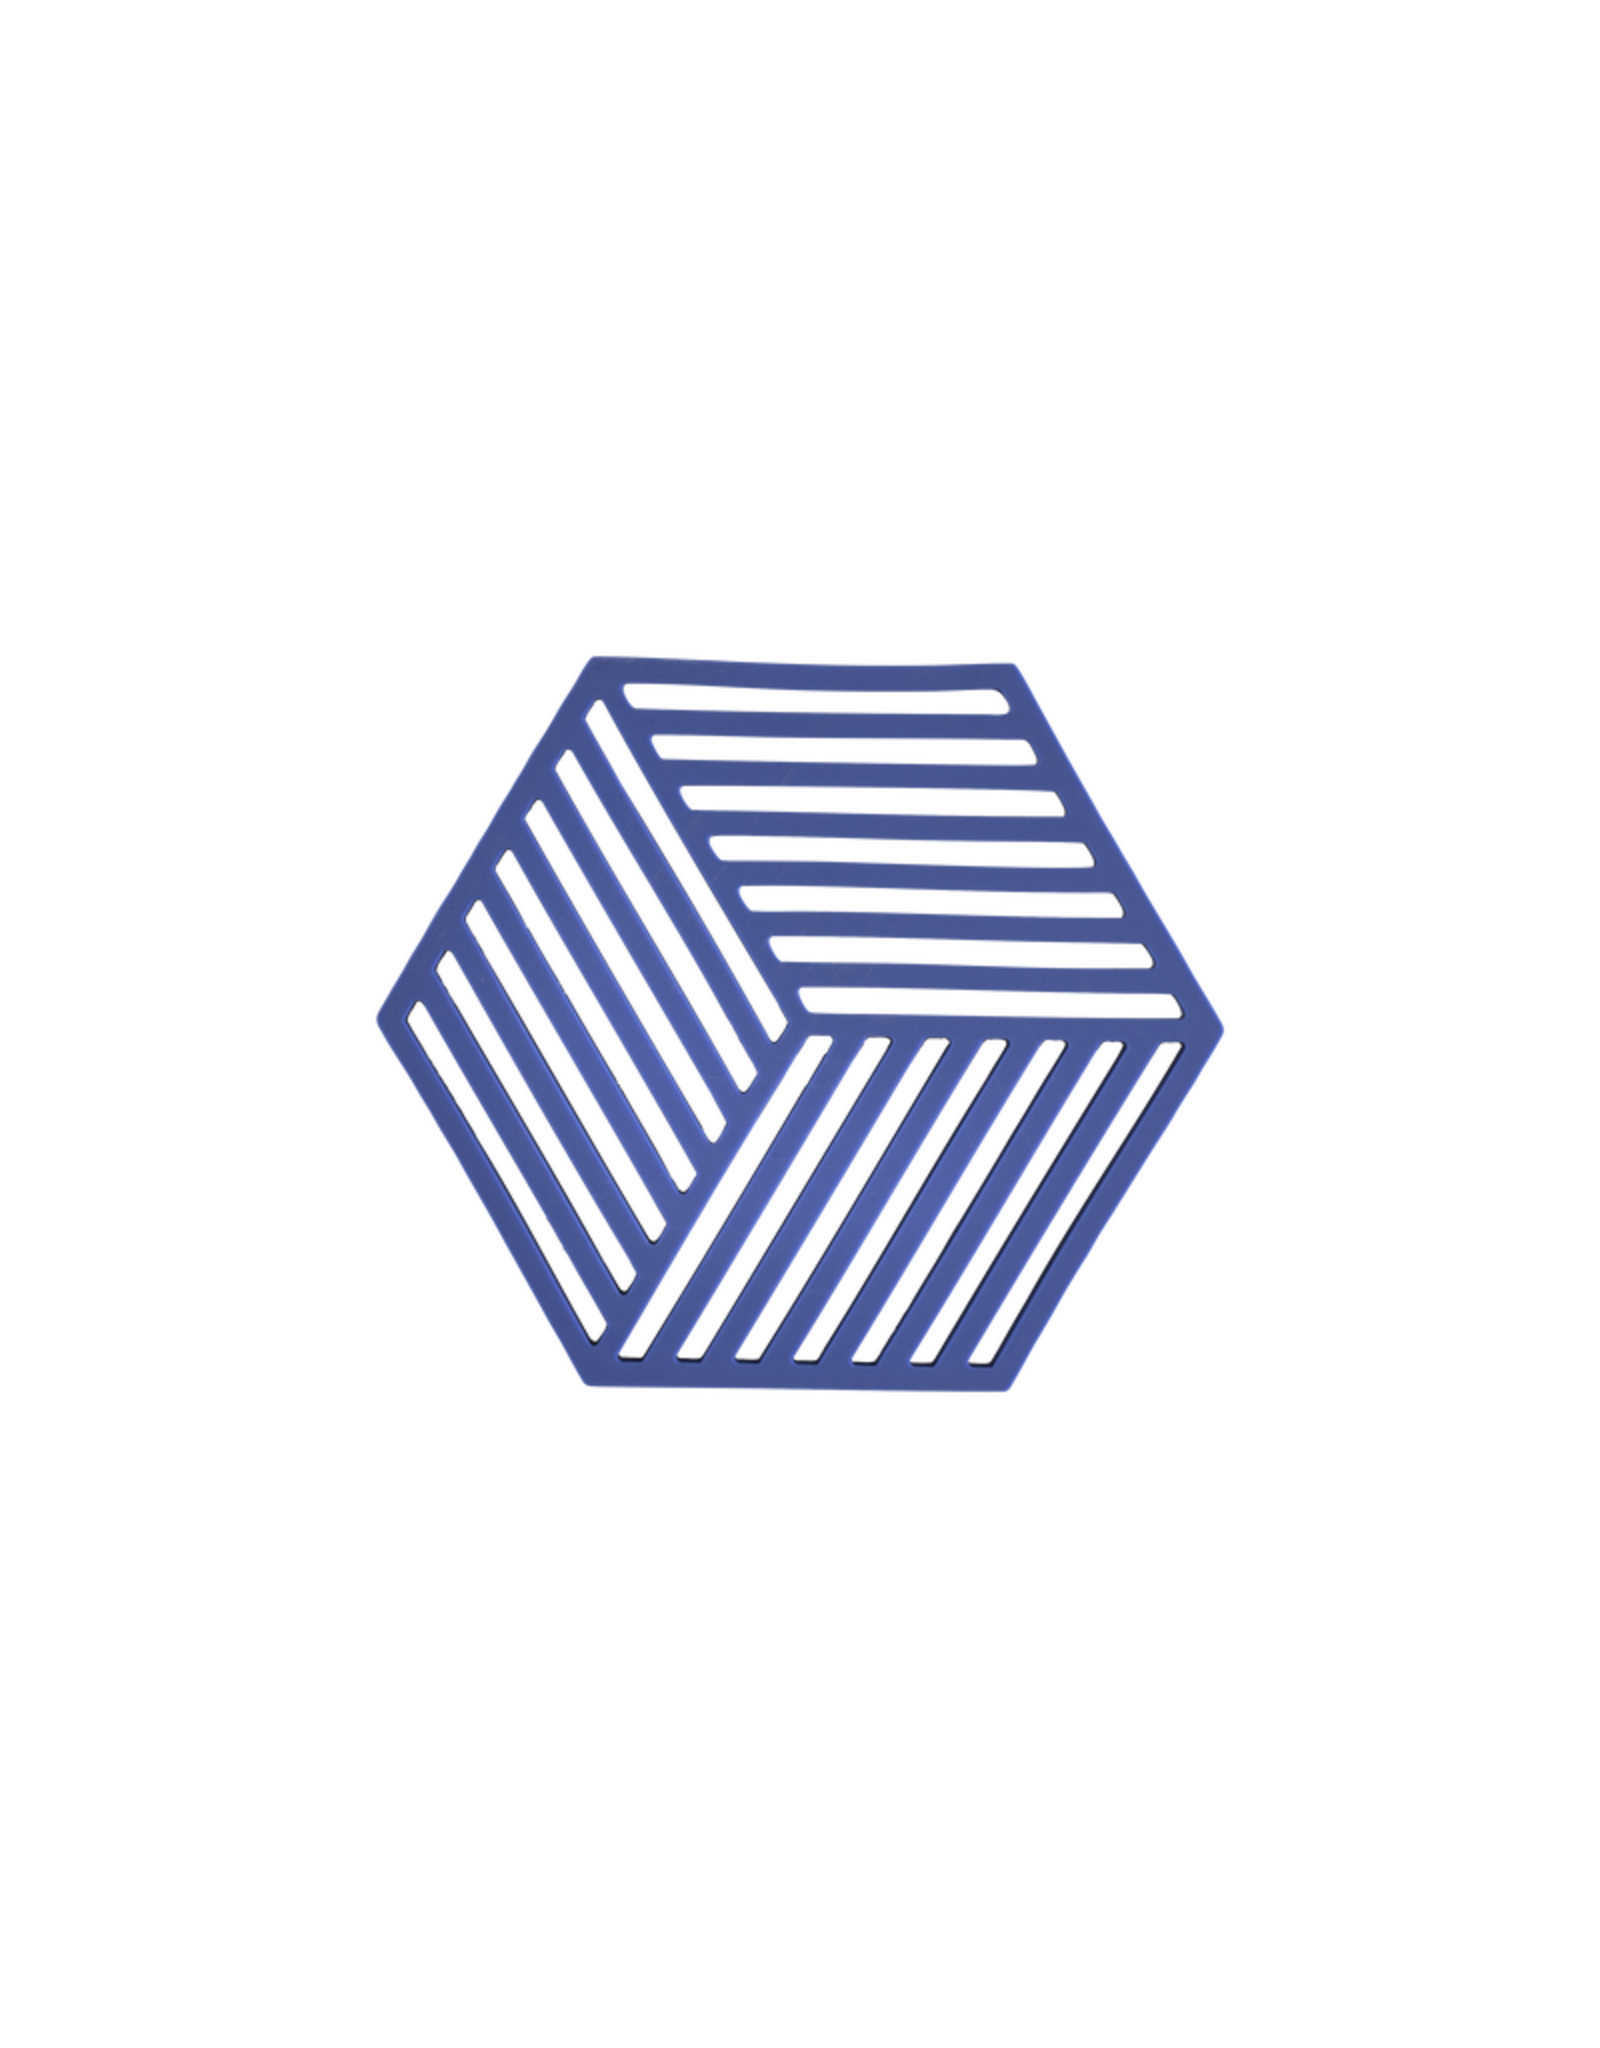 ZONE Denmark Potonderzetter Hexagon Indigo Silicone